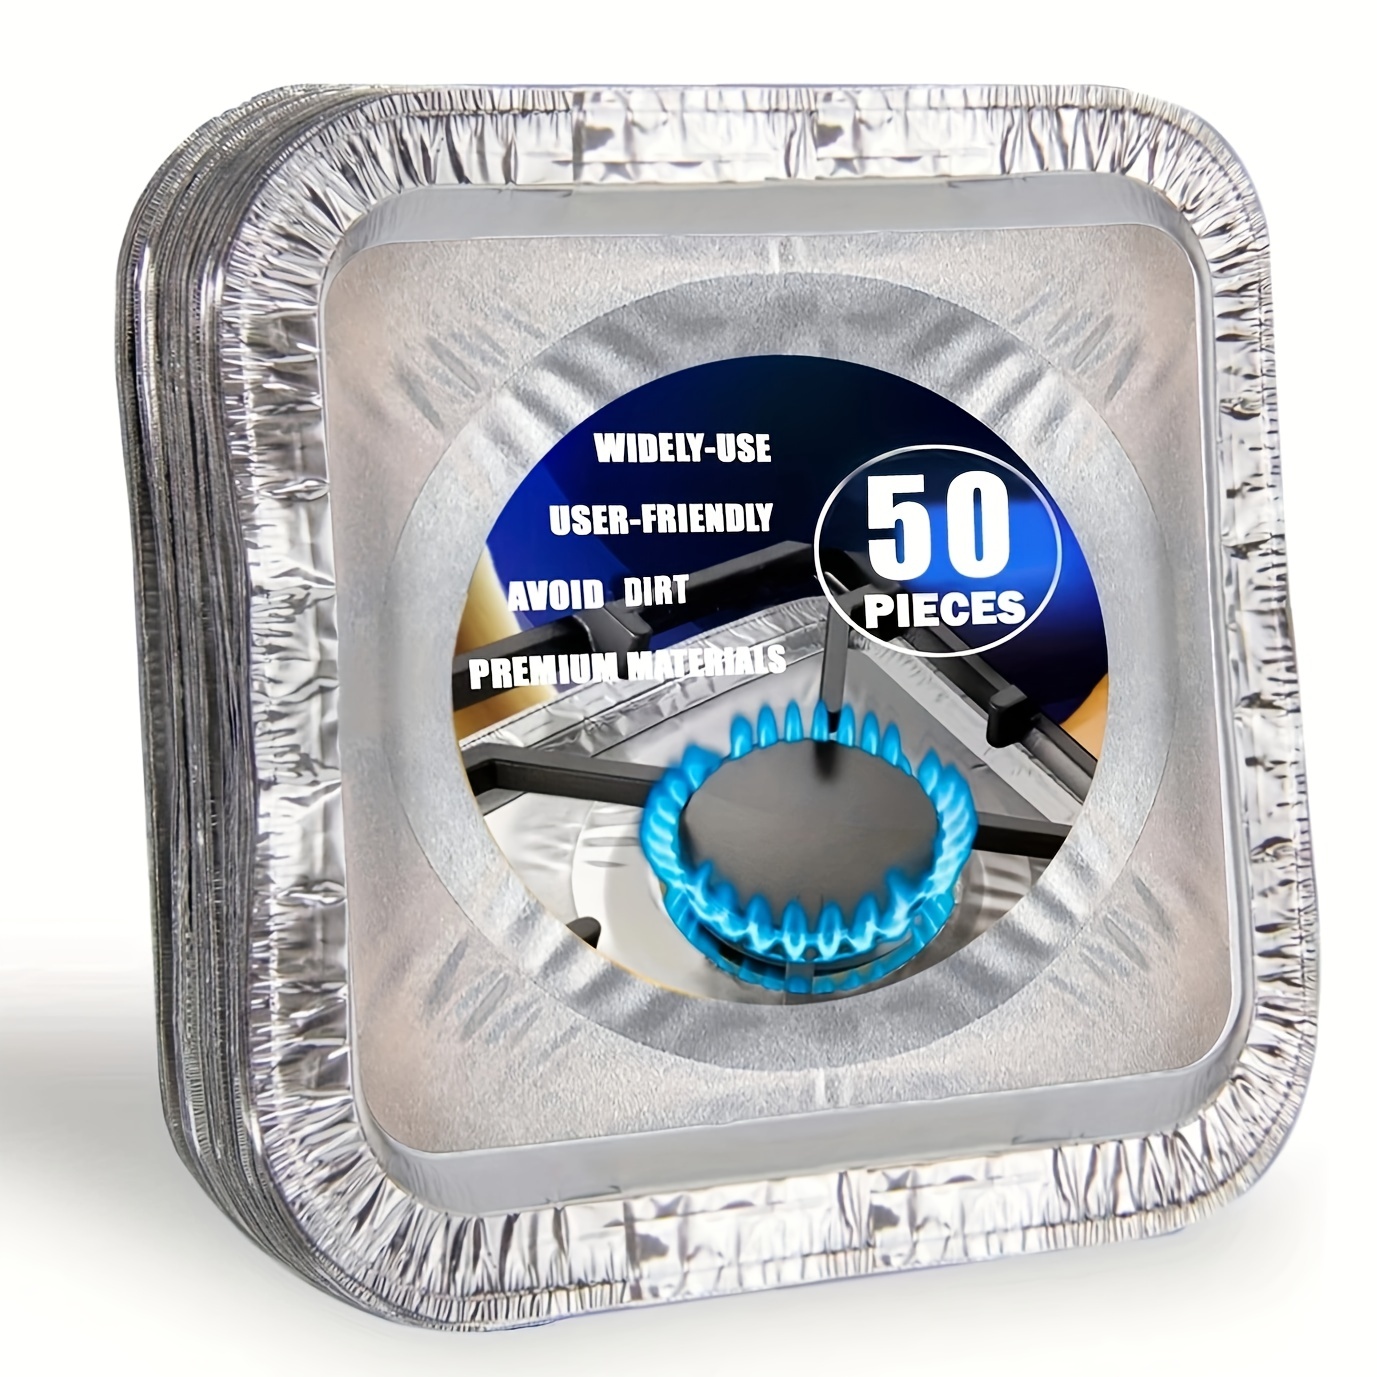 Aluminum Foil Square Stove Burner Covers Range Protectors Bib Liners Disposable